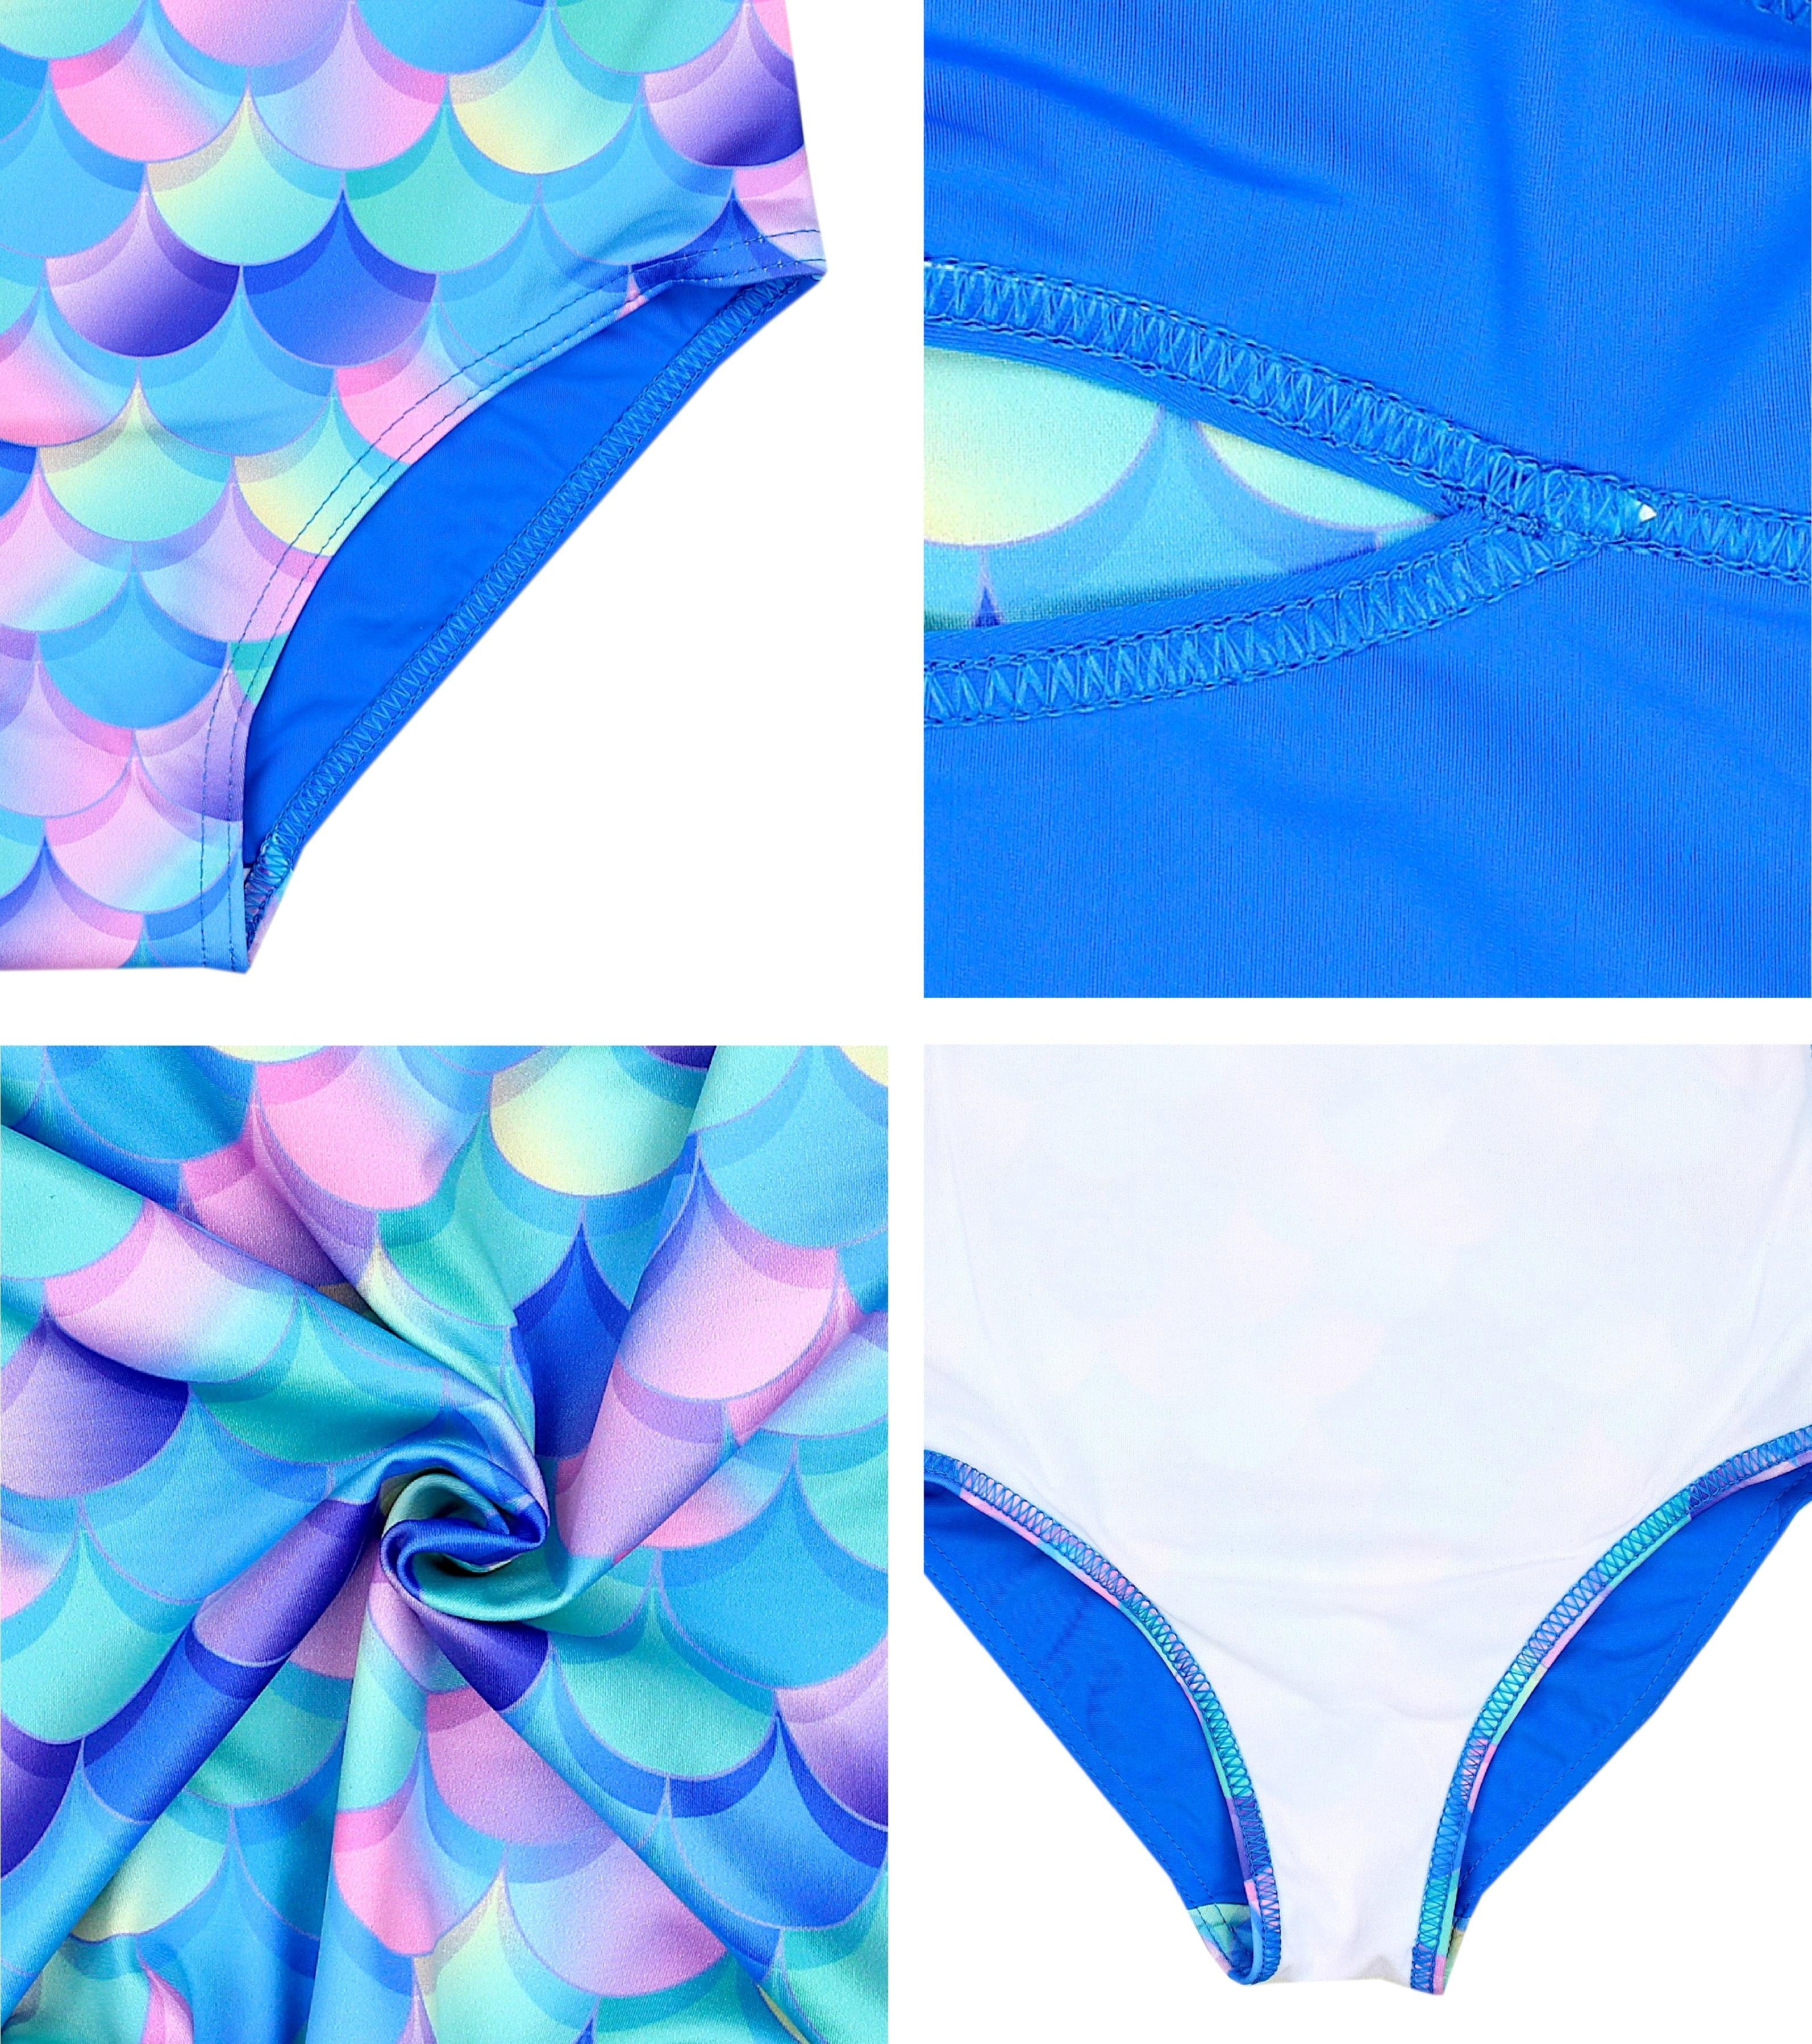 / Aquarti Rosa Blau Badeanzug / Violett Print Ringerrücken Badeanzug mit Mädchen Meerjungfrau Aquarti